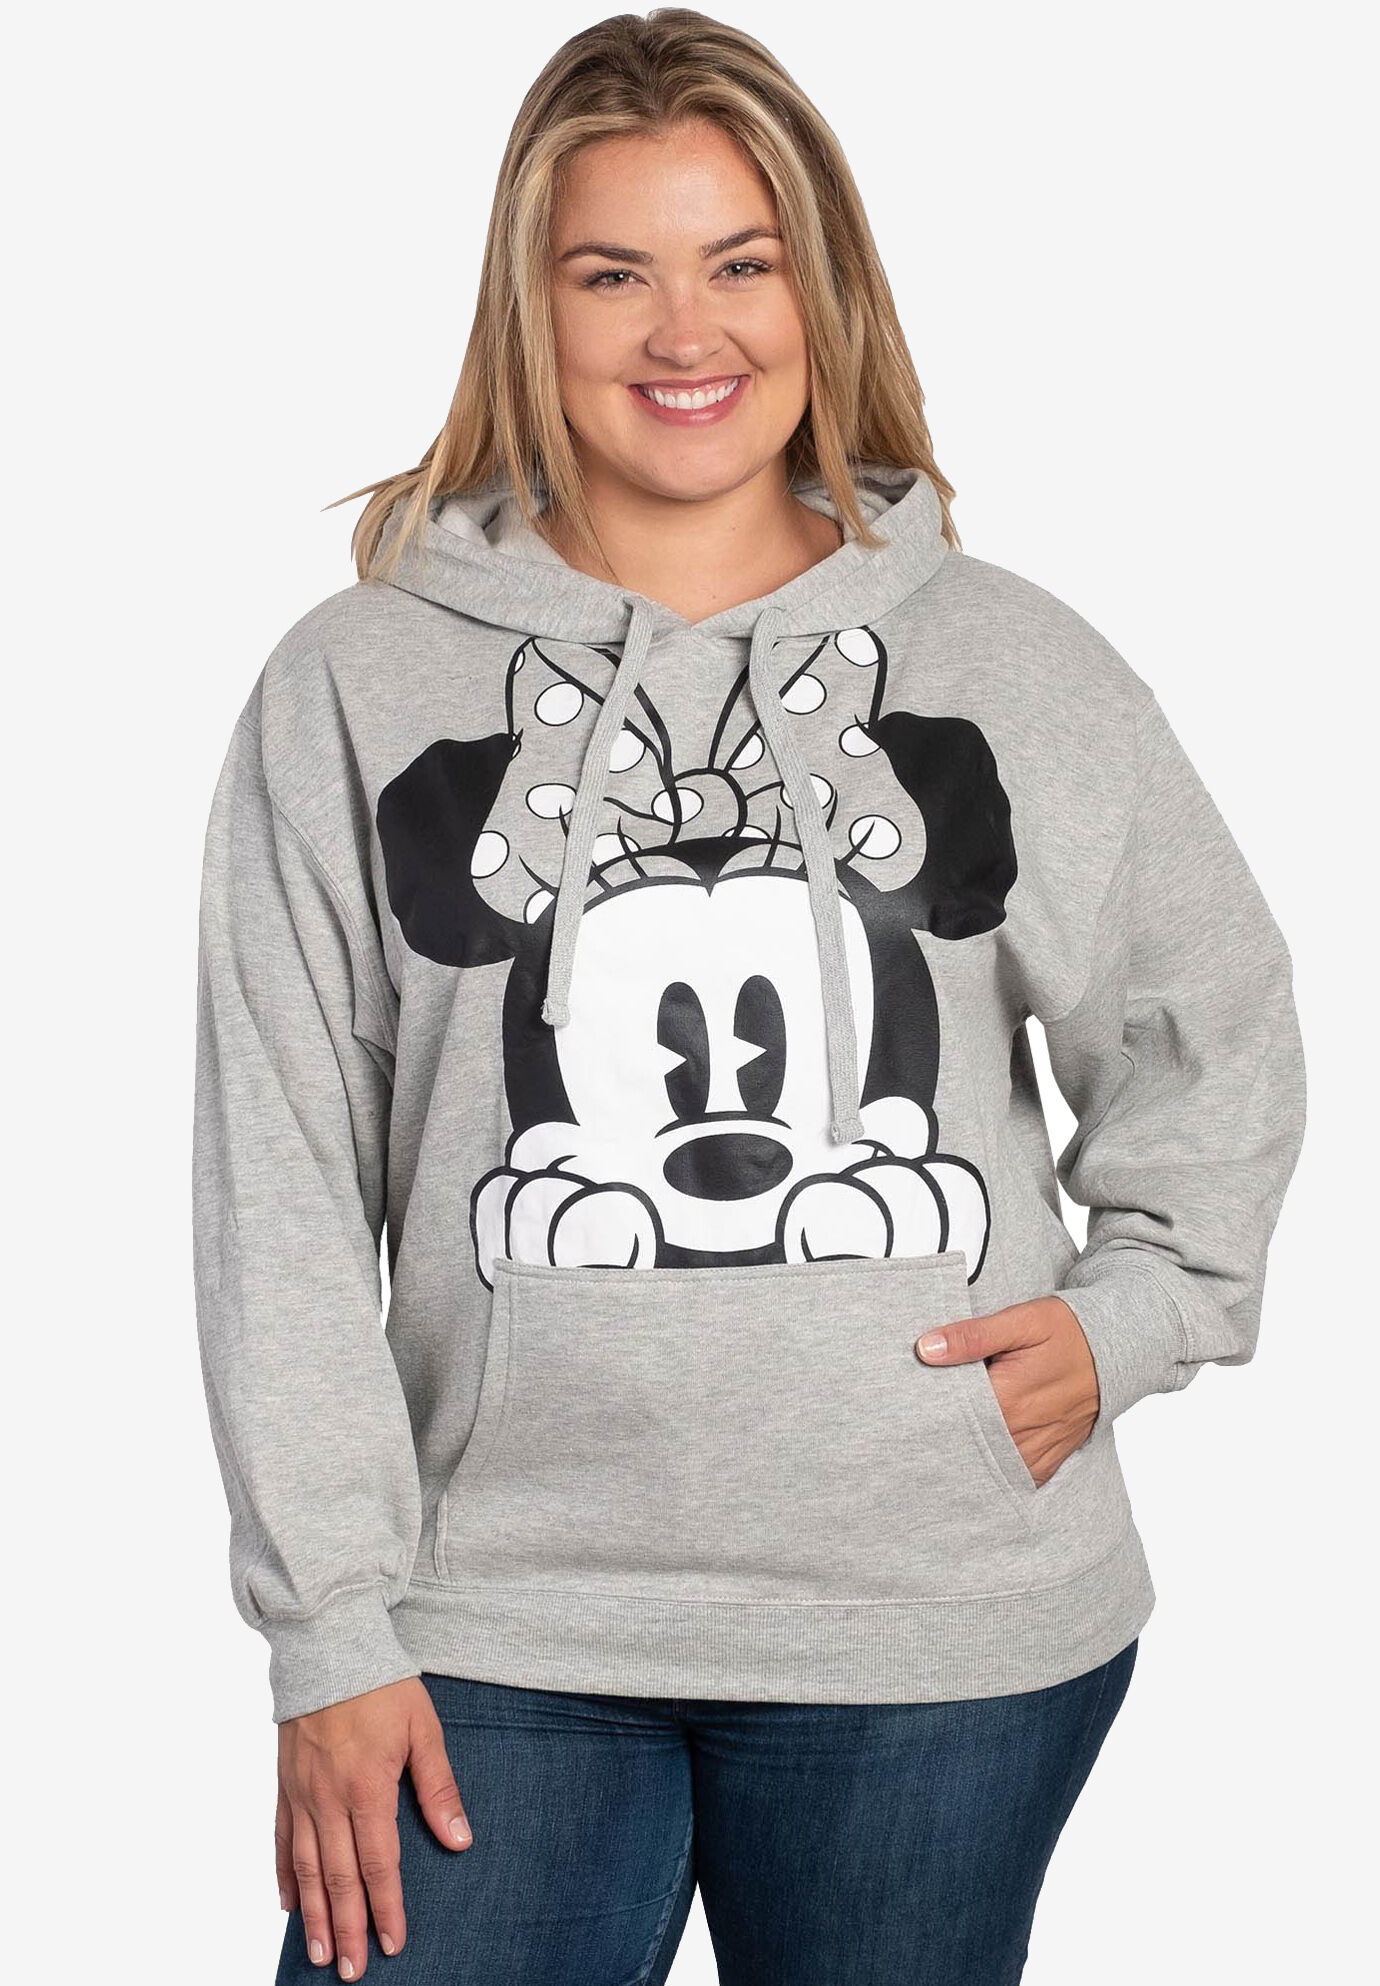 Disney Minnie Mouse Peeking Hoodie Sweatshirt Gray | Roaman's